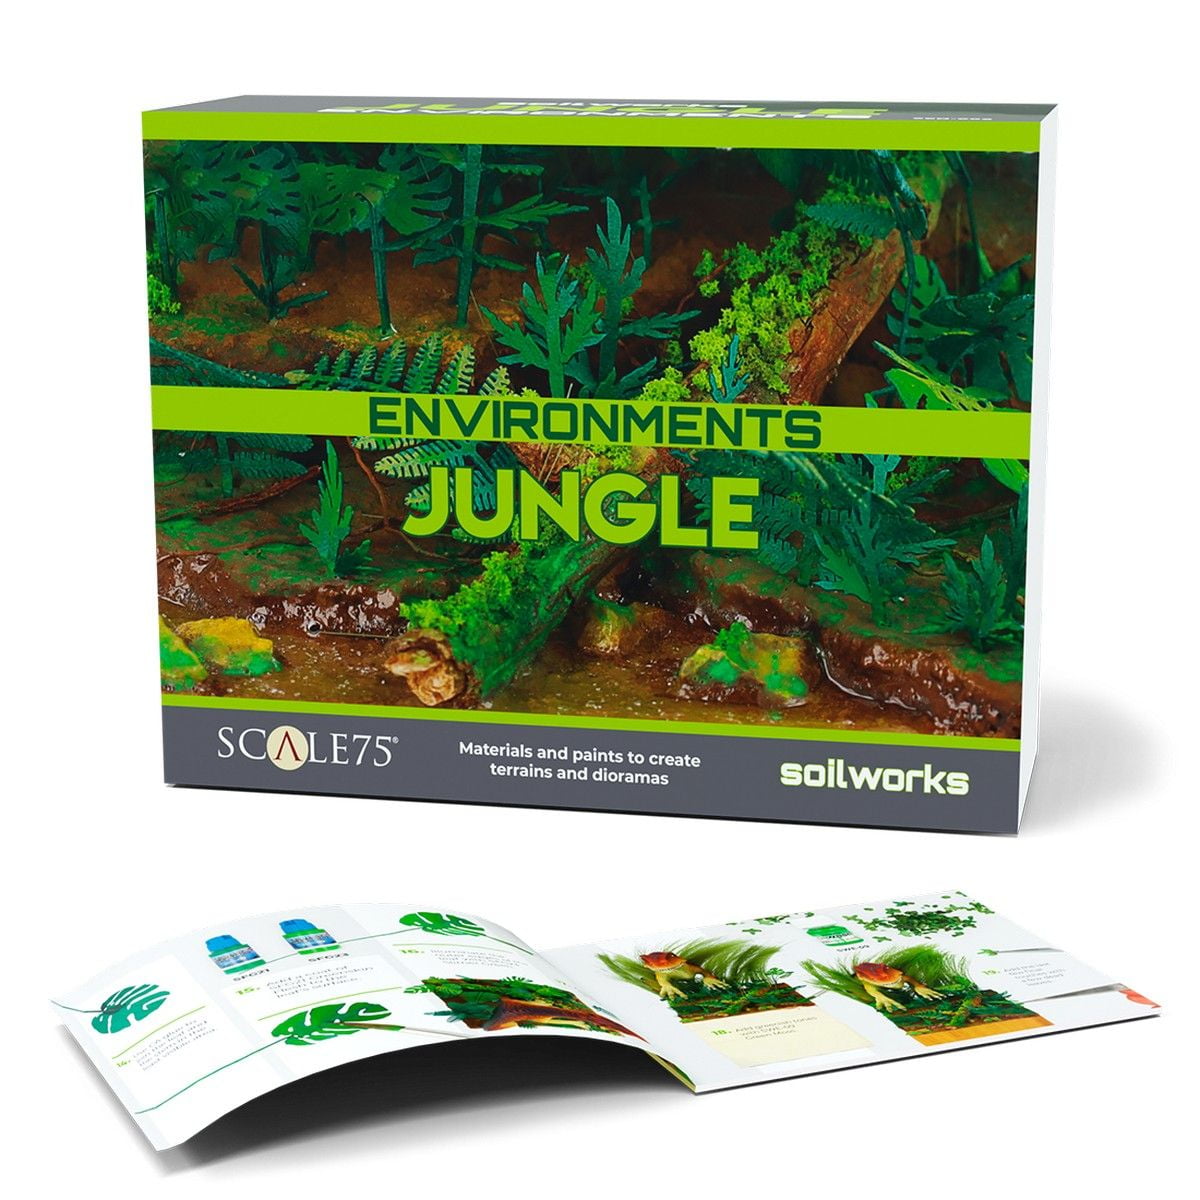 Soilworks: Environments - Jungle